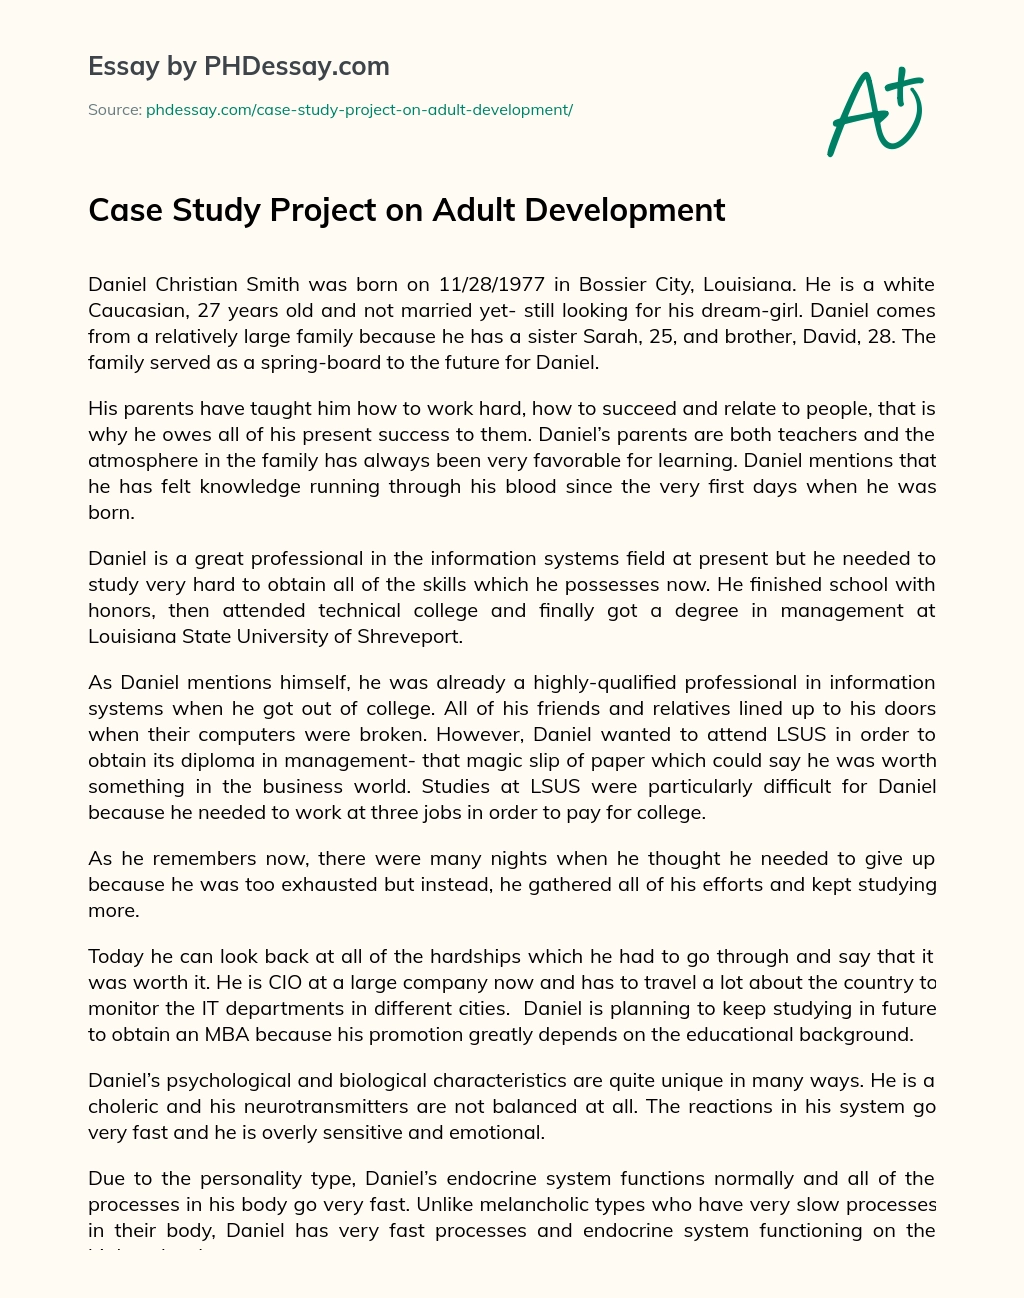 Case Study Project on Adult Development essay